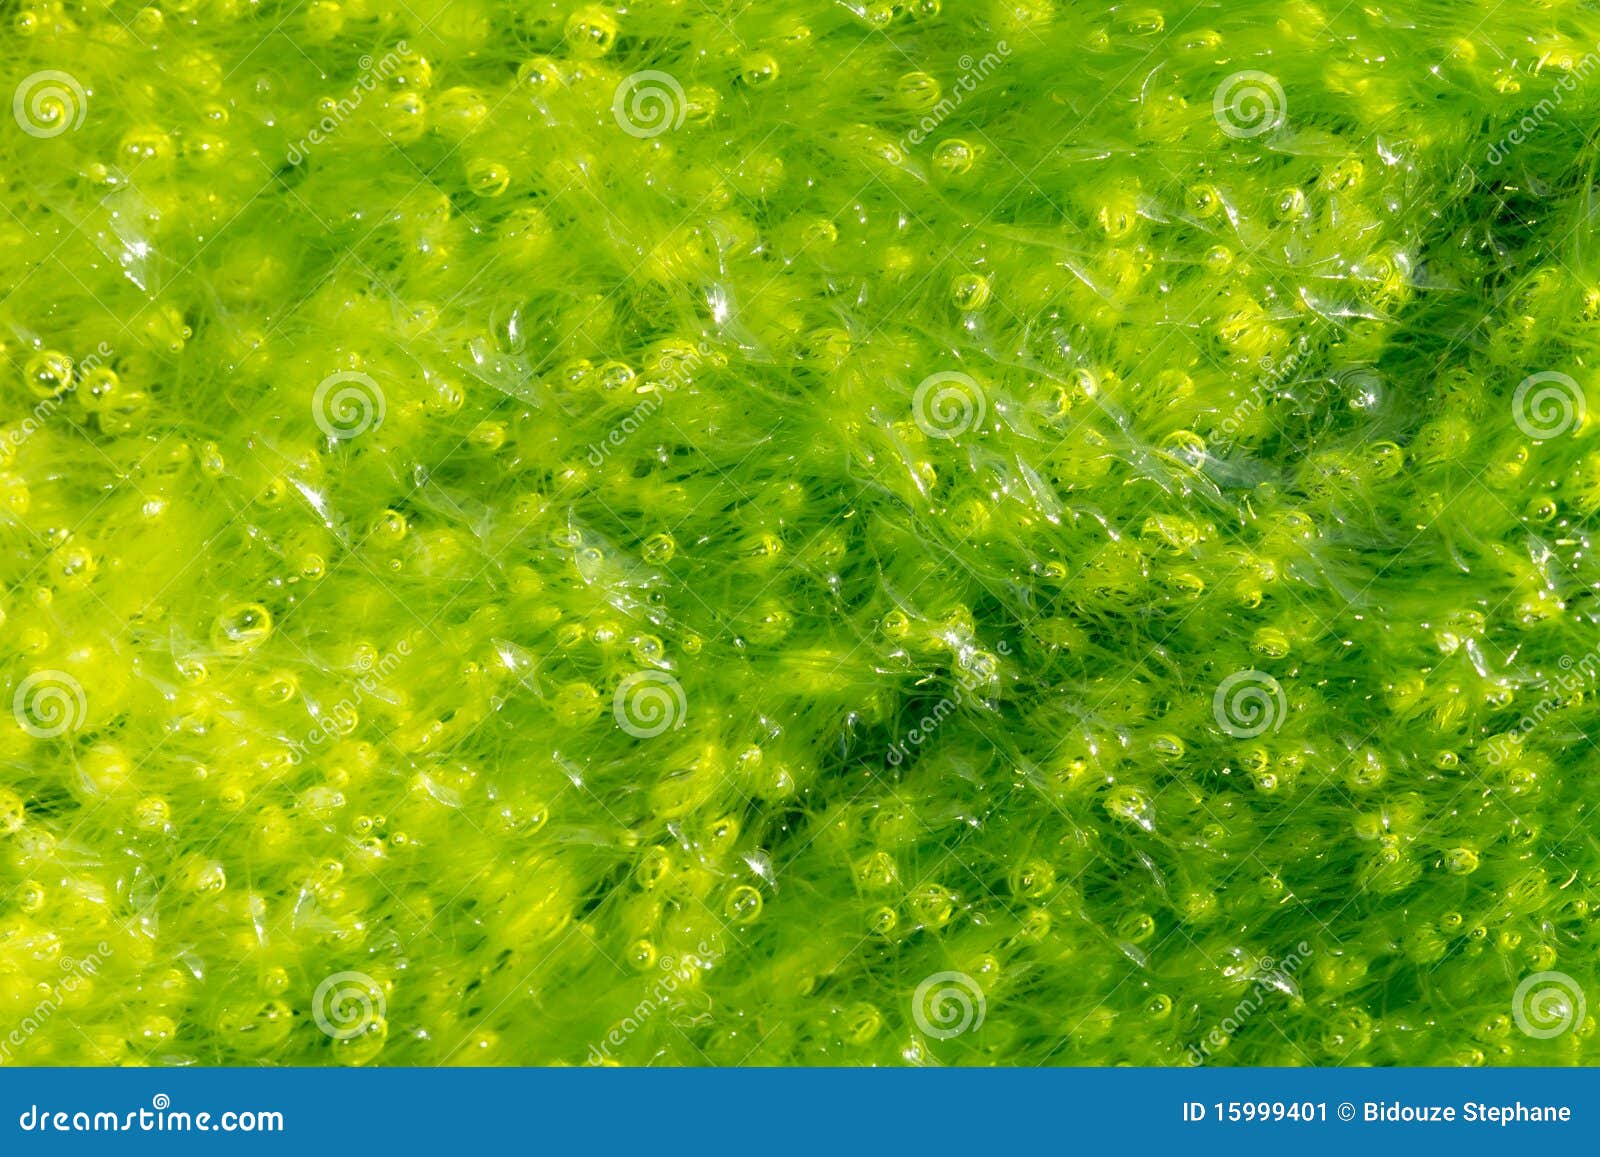 ulva alga background